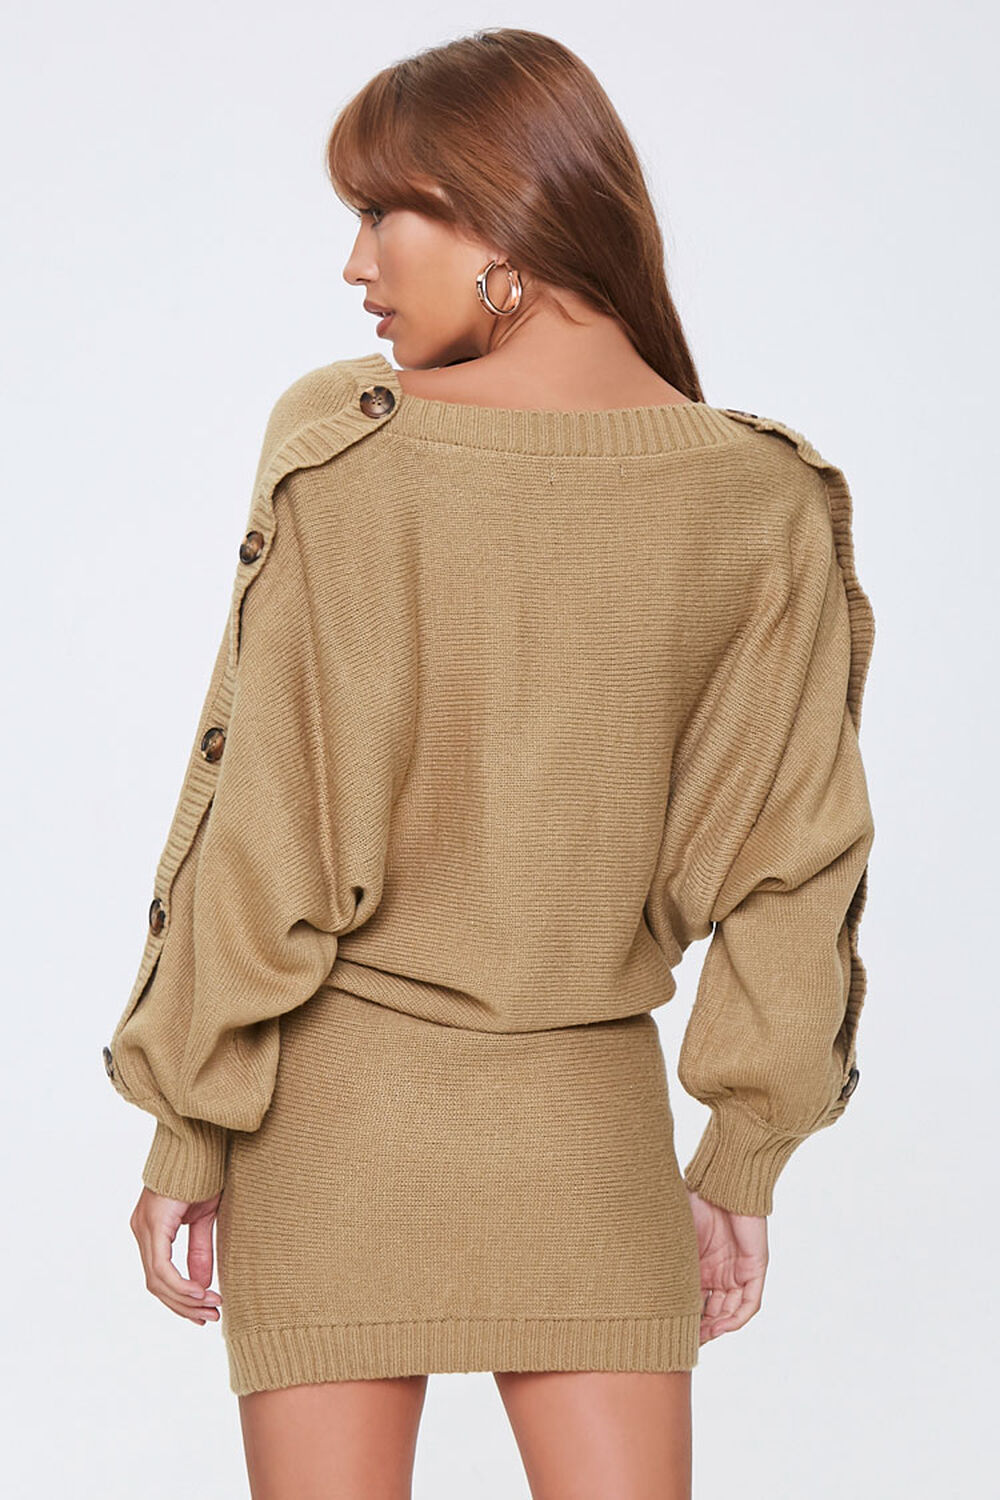 OLIVE Button-Trim Sweater Dress, image 3